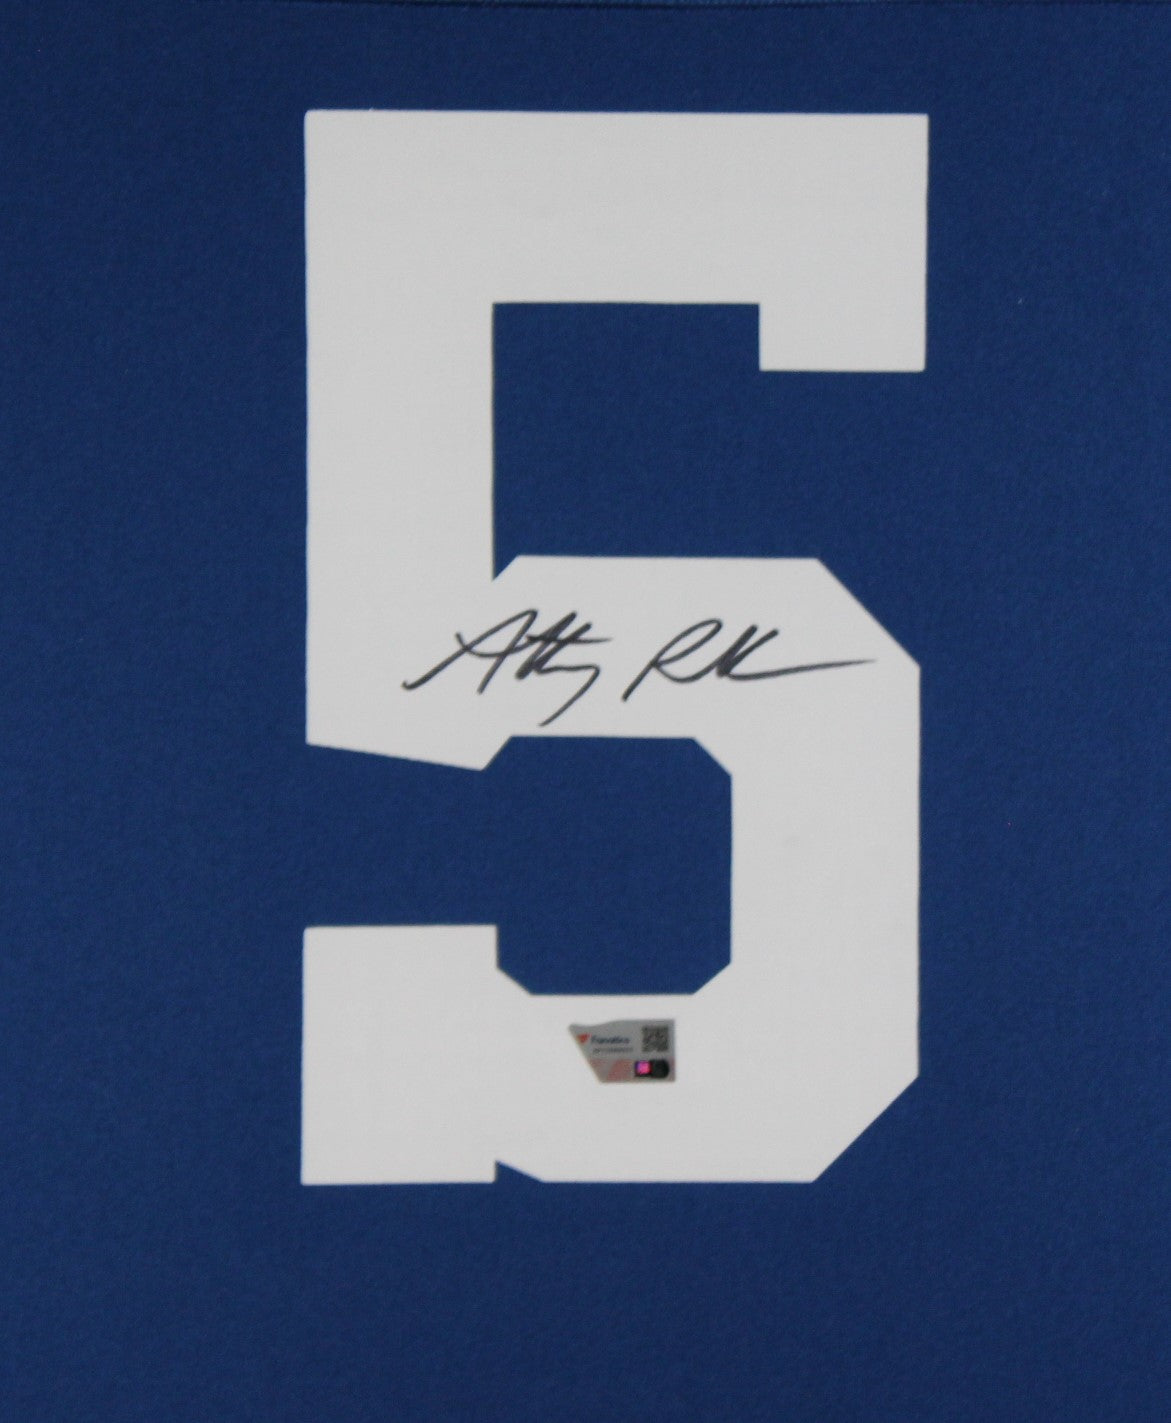 Anthony Richardson Autographed Indianapolis Colts Signed Nike Game Football Framed Jersey Fanatics Authentic COA-Powers Sports Memorabilia